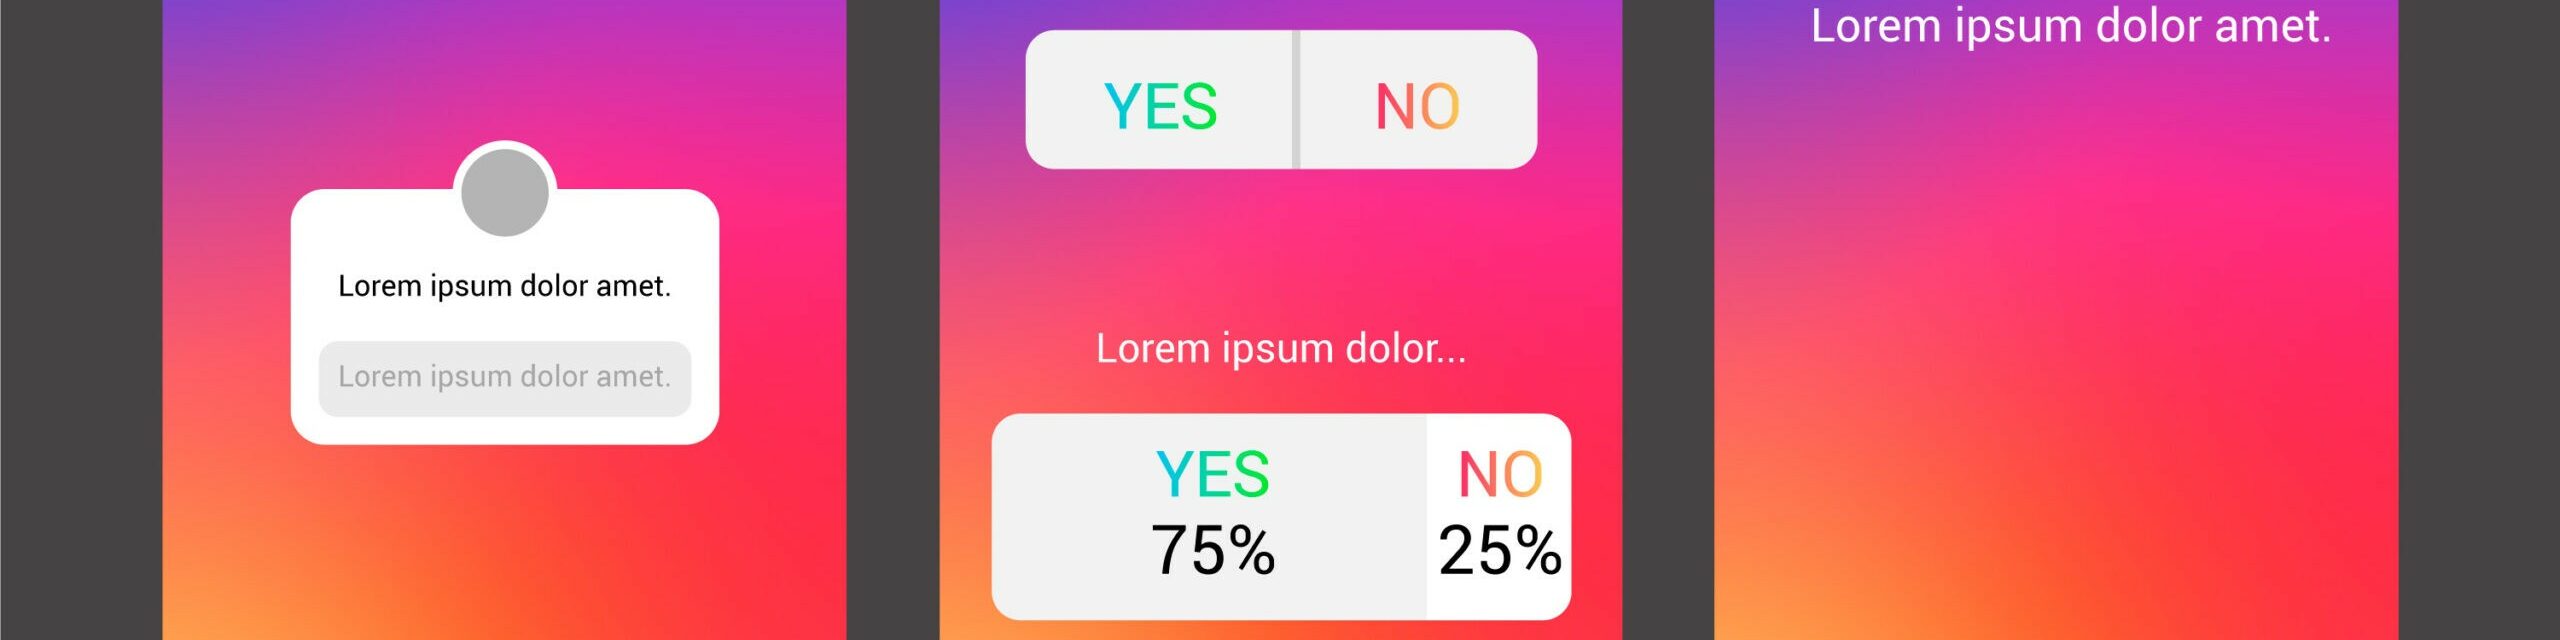 sondages interactifs sur Instagram maxifollowers